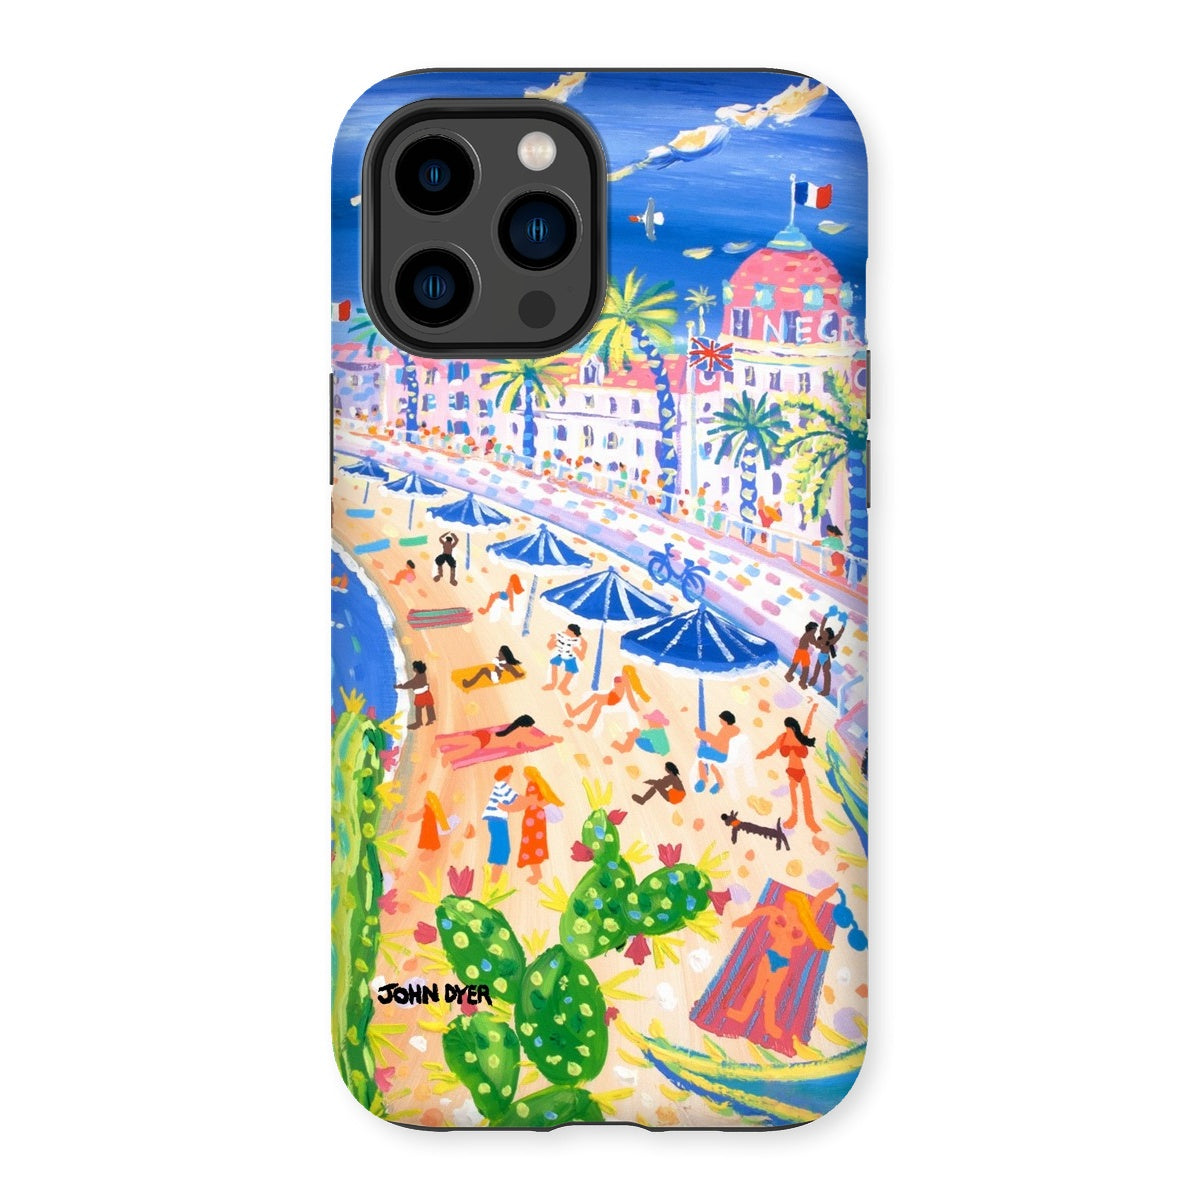 Tough Art iPhone Case. Nice Beach, Promenade des Anglais, France. Artist John Dyer. French Art Gallery